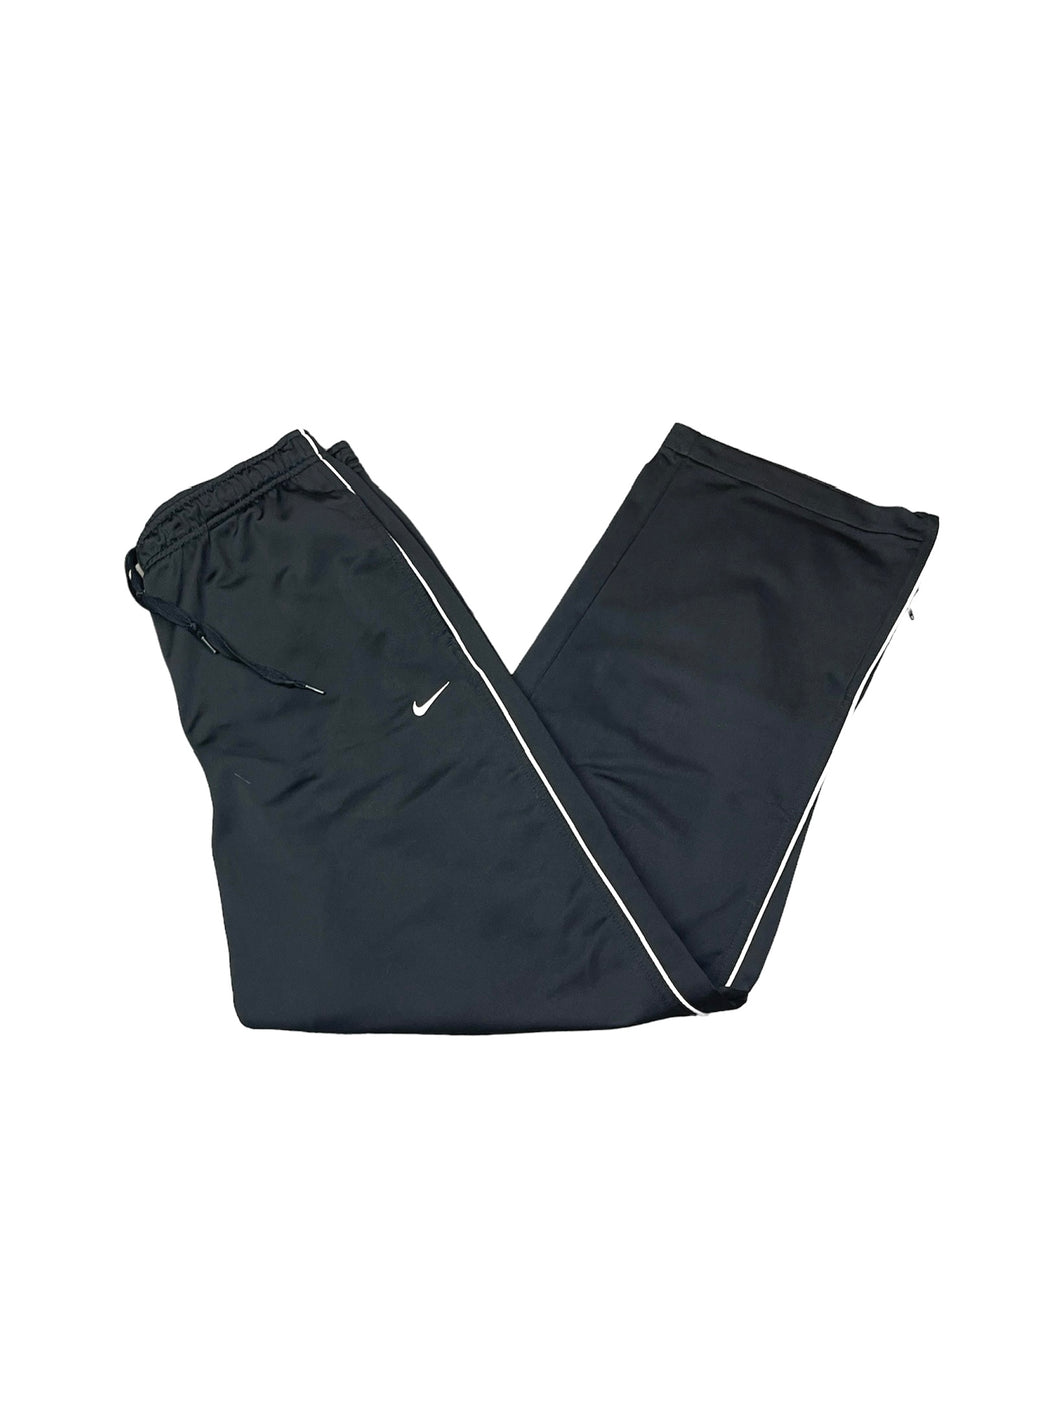 Nike Baggy Track Pant - Medium